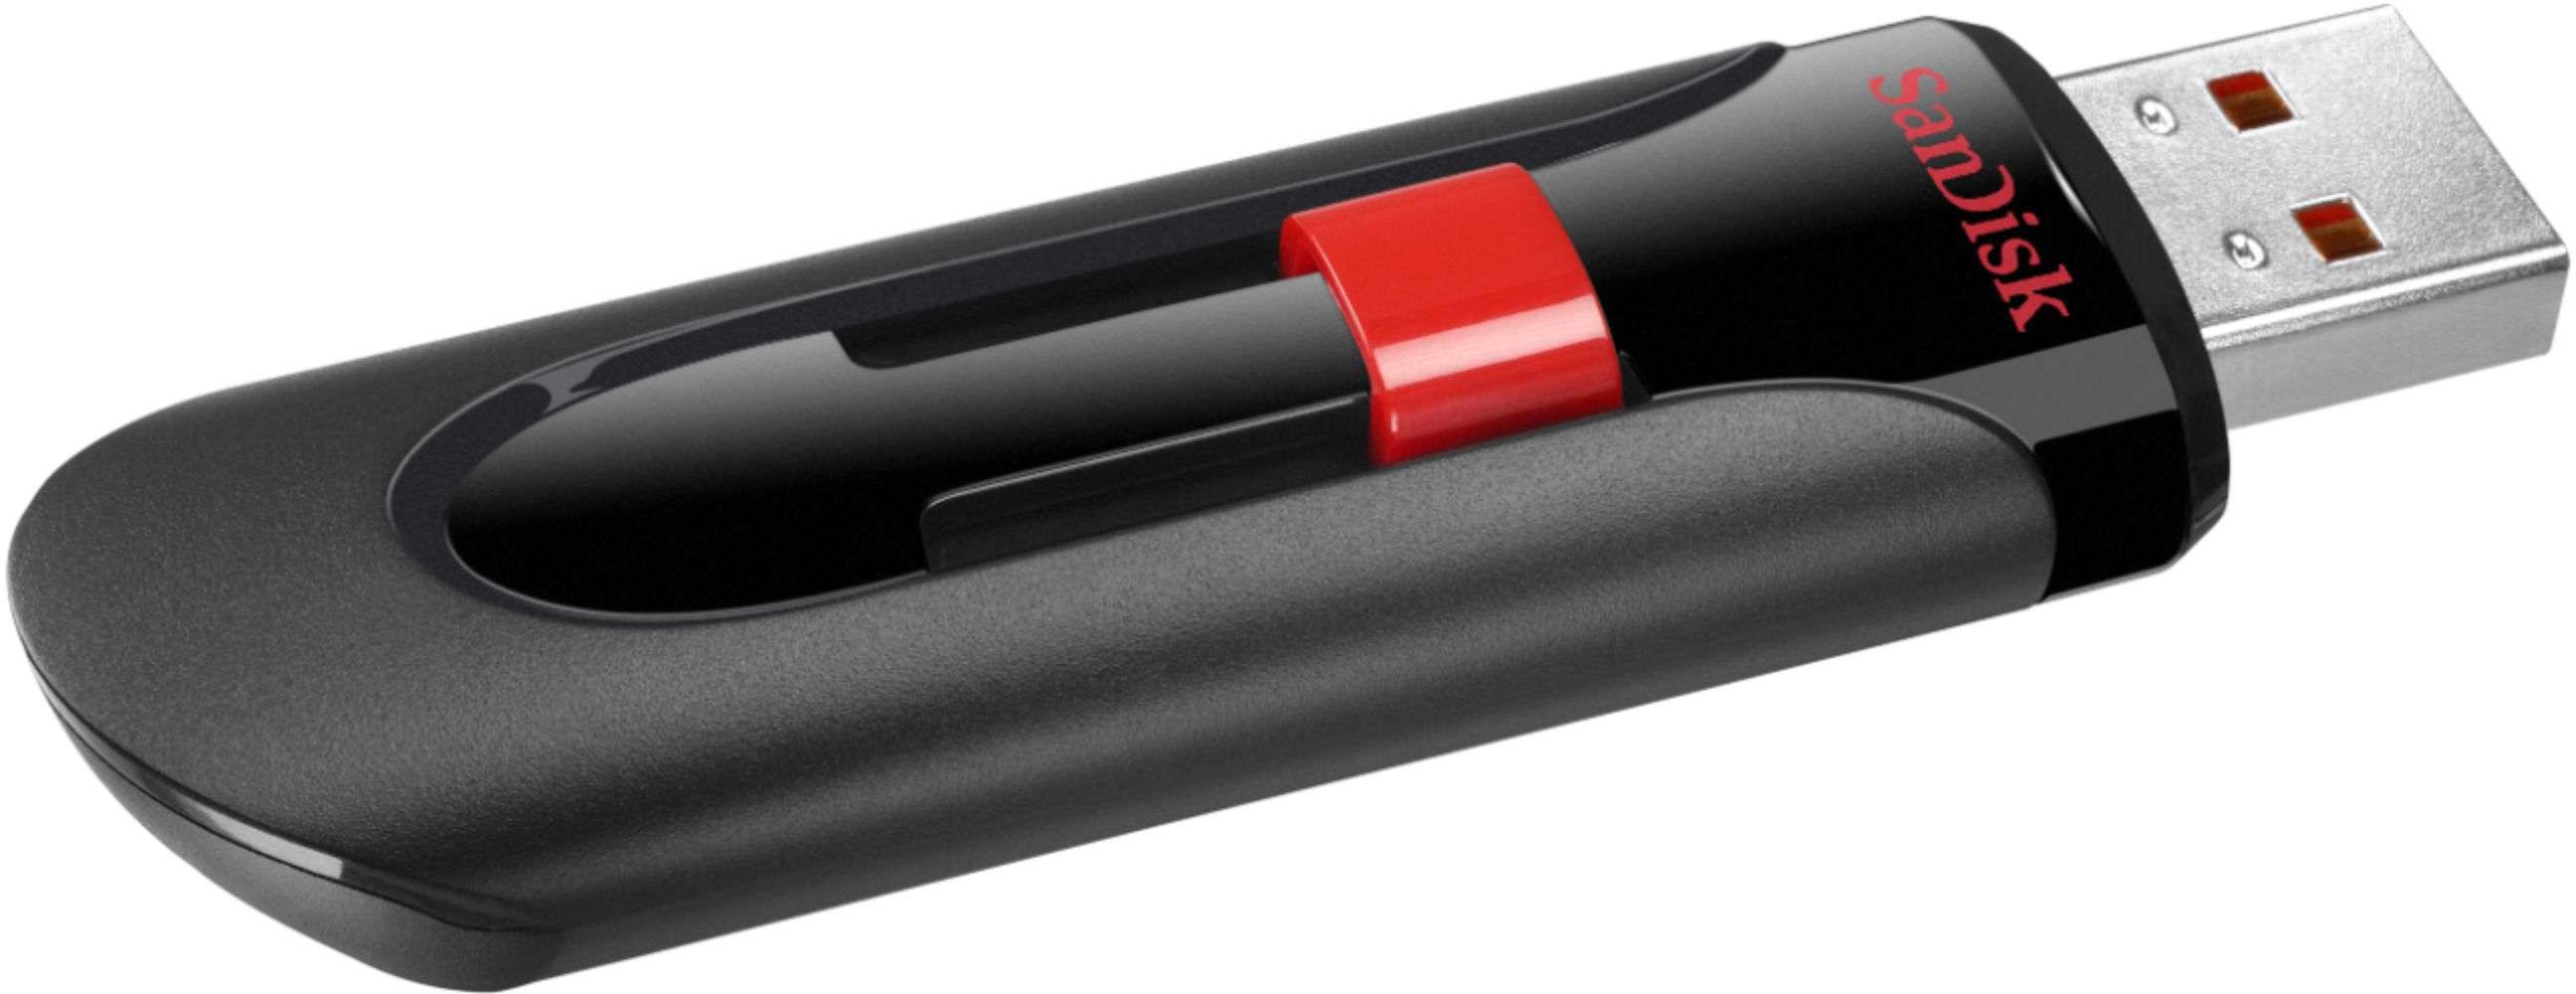 SanDisk Cruzer Glide 64GB USB 2.0 Flash Drive - Black